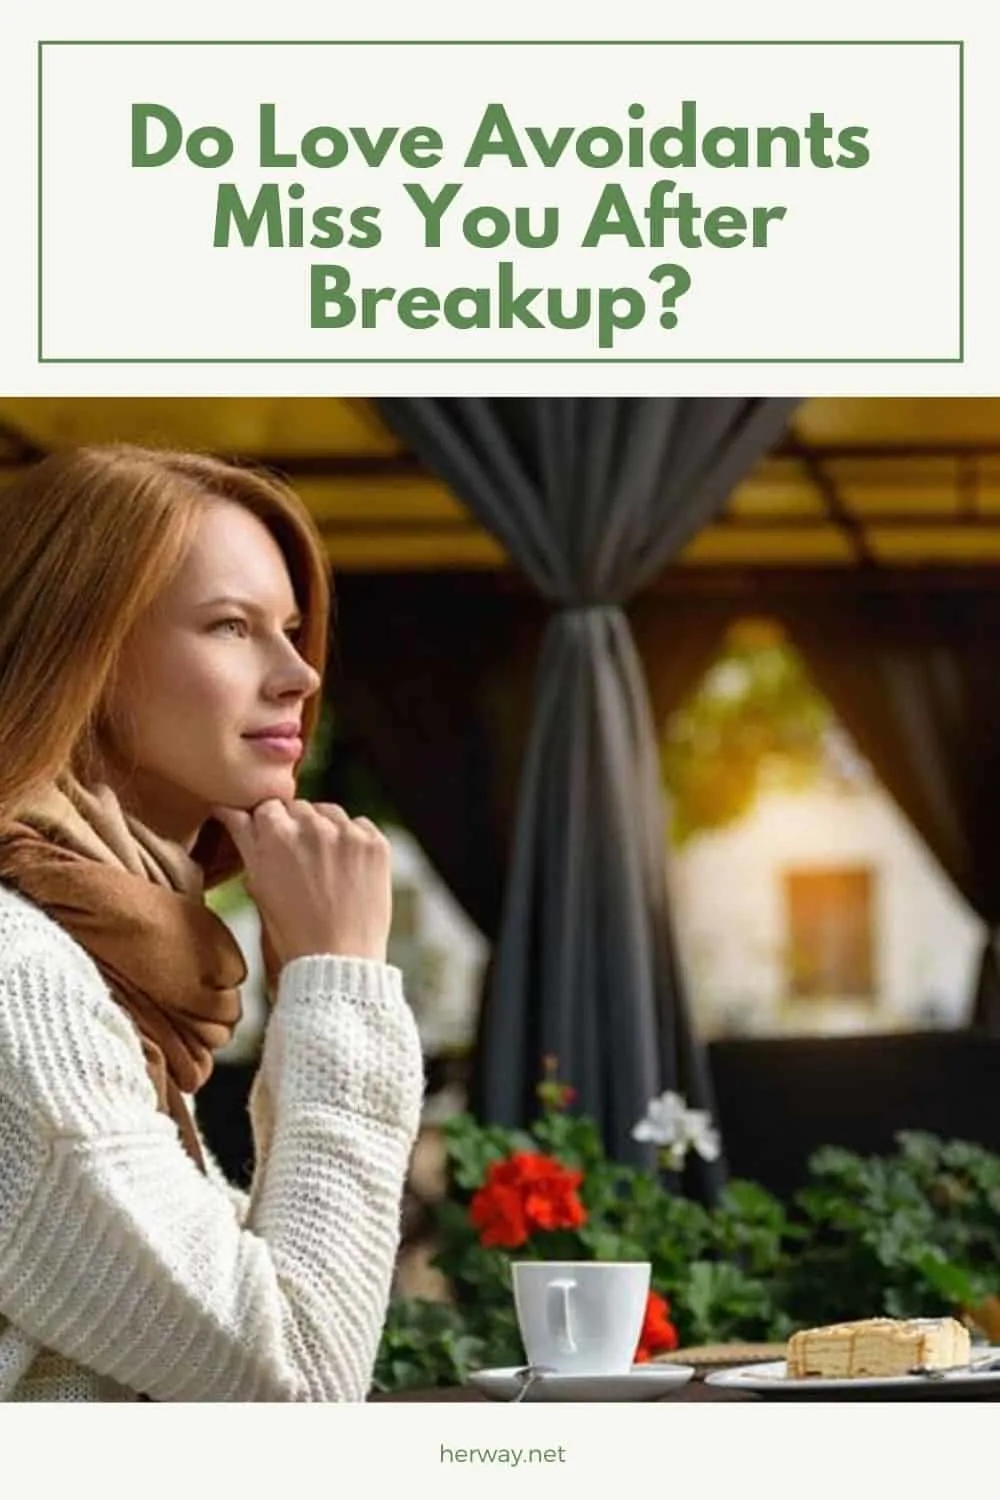 Do Love Avoidants Miss You After Breakup?